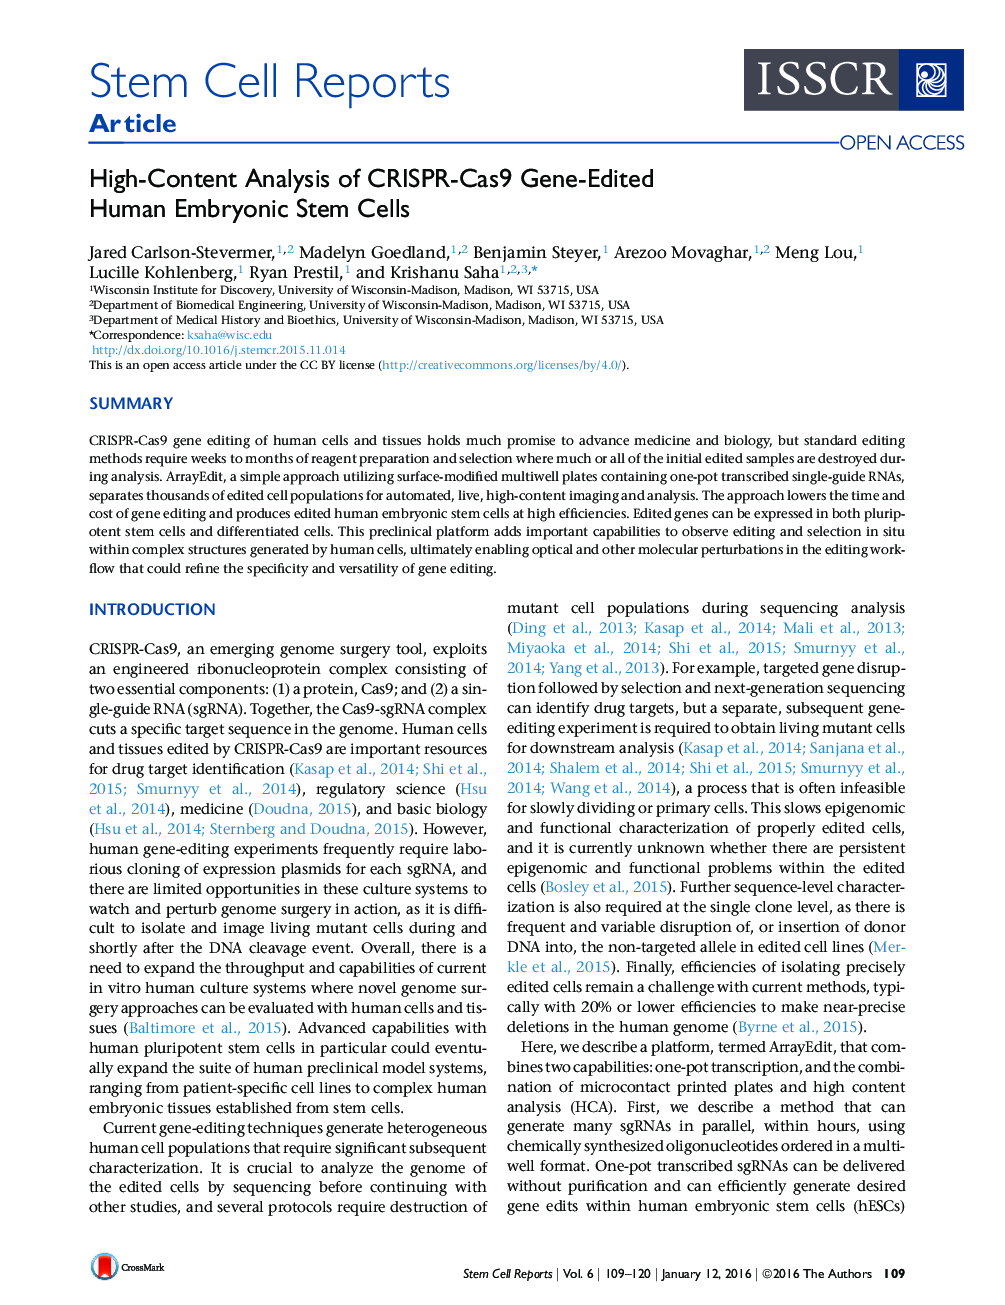 High-Content Analysis of CRISPR-Cas9 Gene-Edited Human Embryonic Stem Cells 